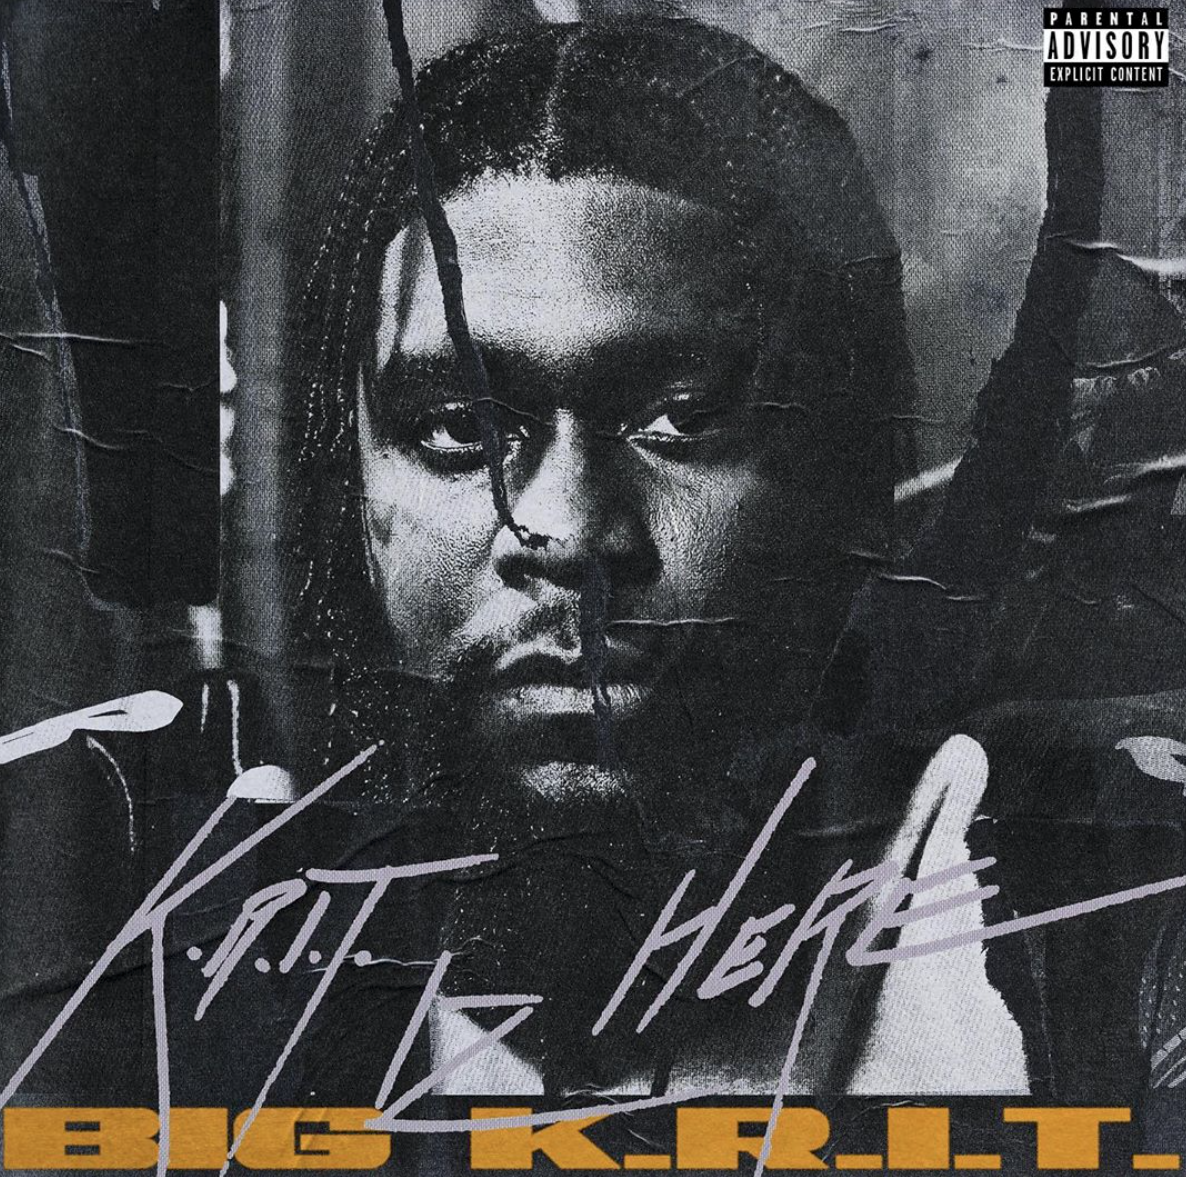 Big K.R.I.T. Drops New Album “K.R.I.T. IZ HERE” Feat. J.Cole, Lil Wayne and More